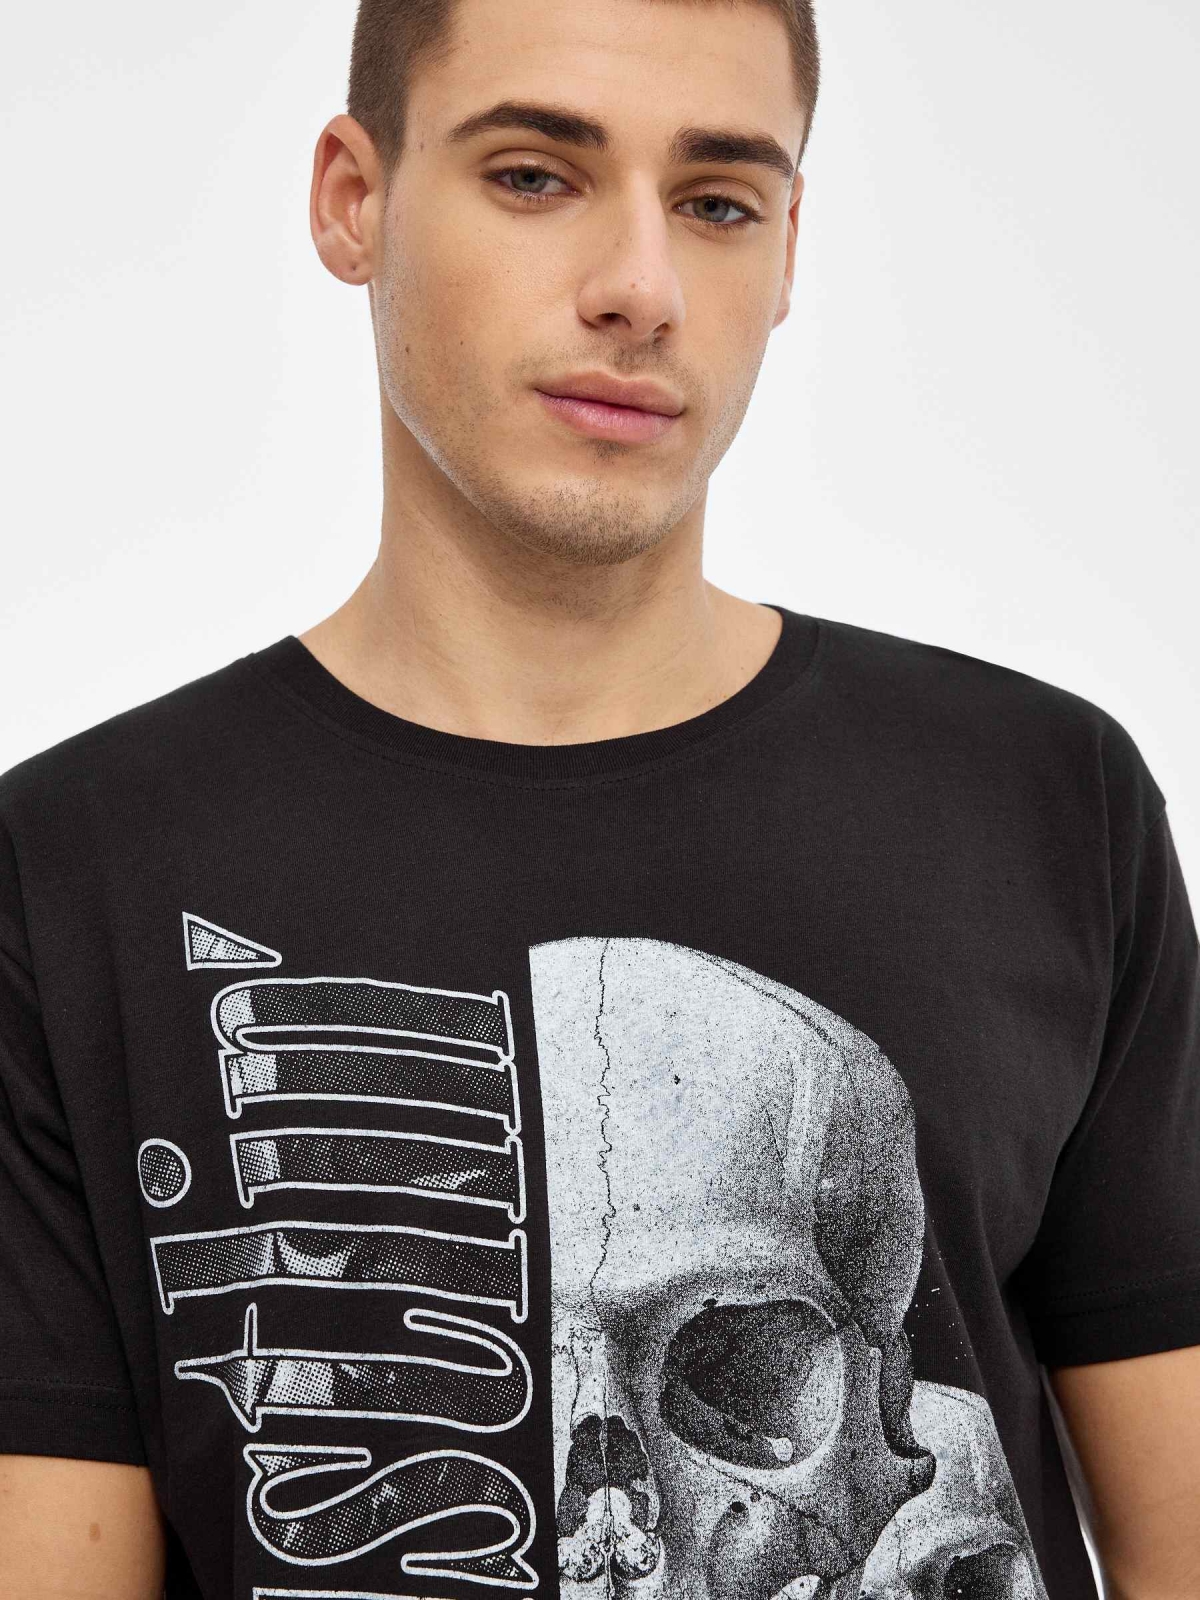 Skull printed t-shirt black detail view